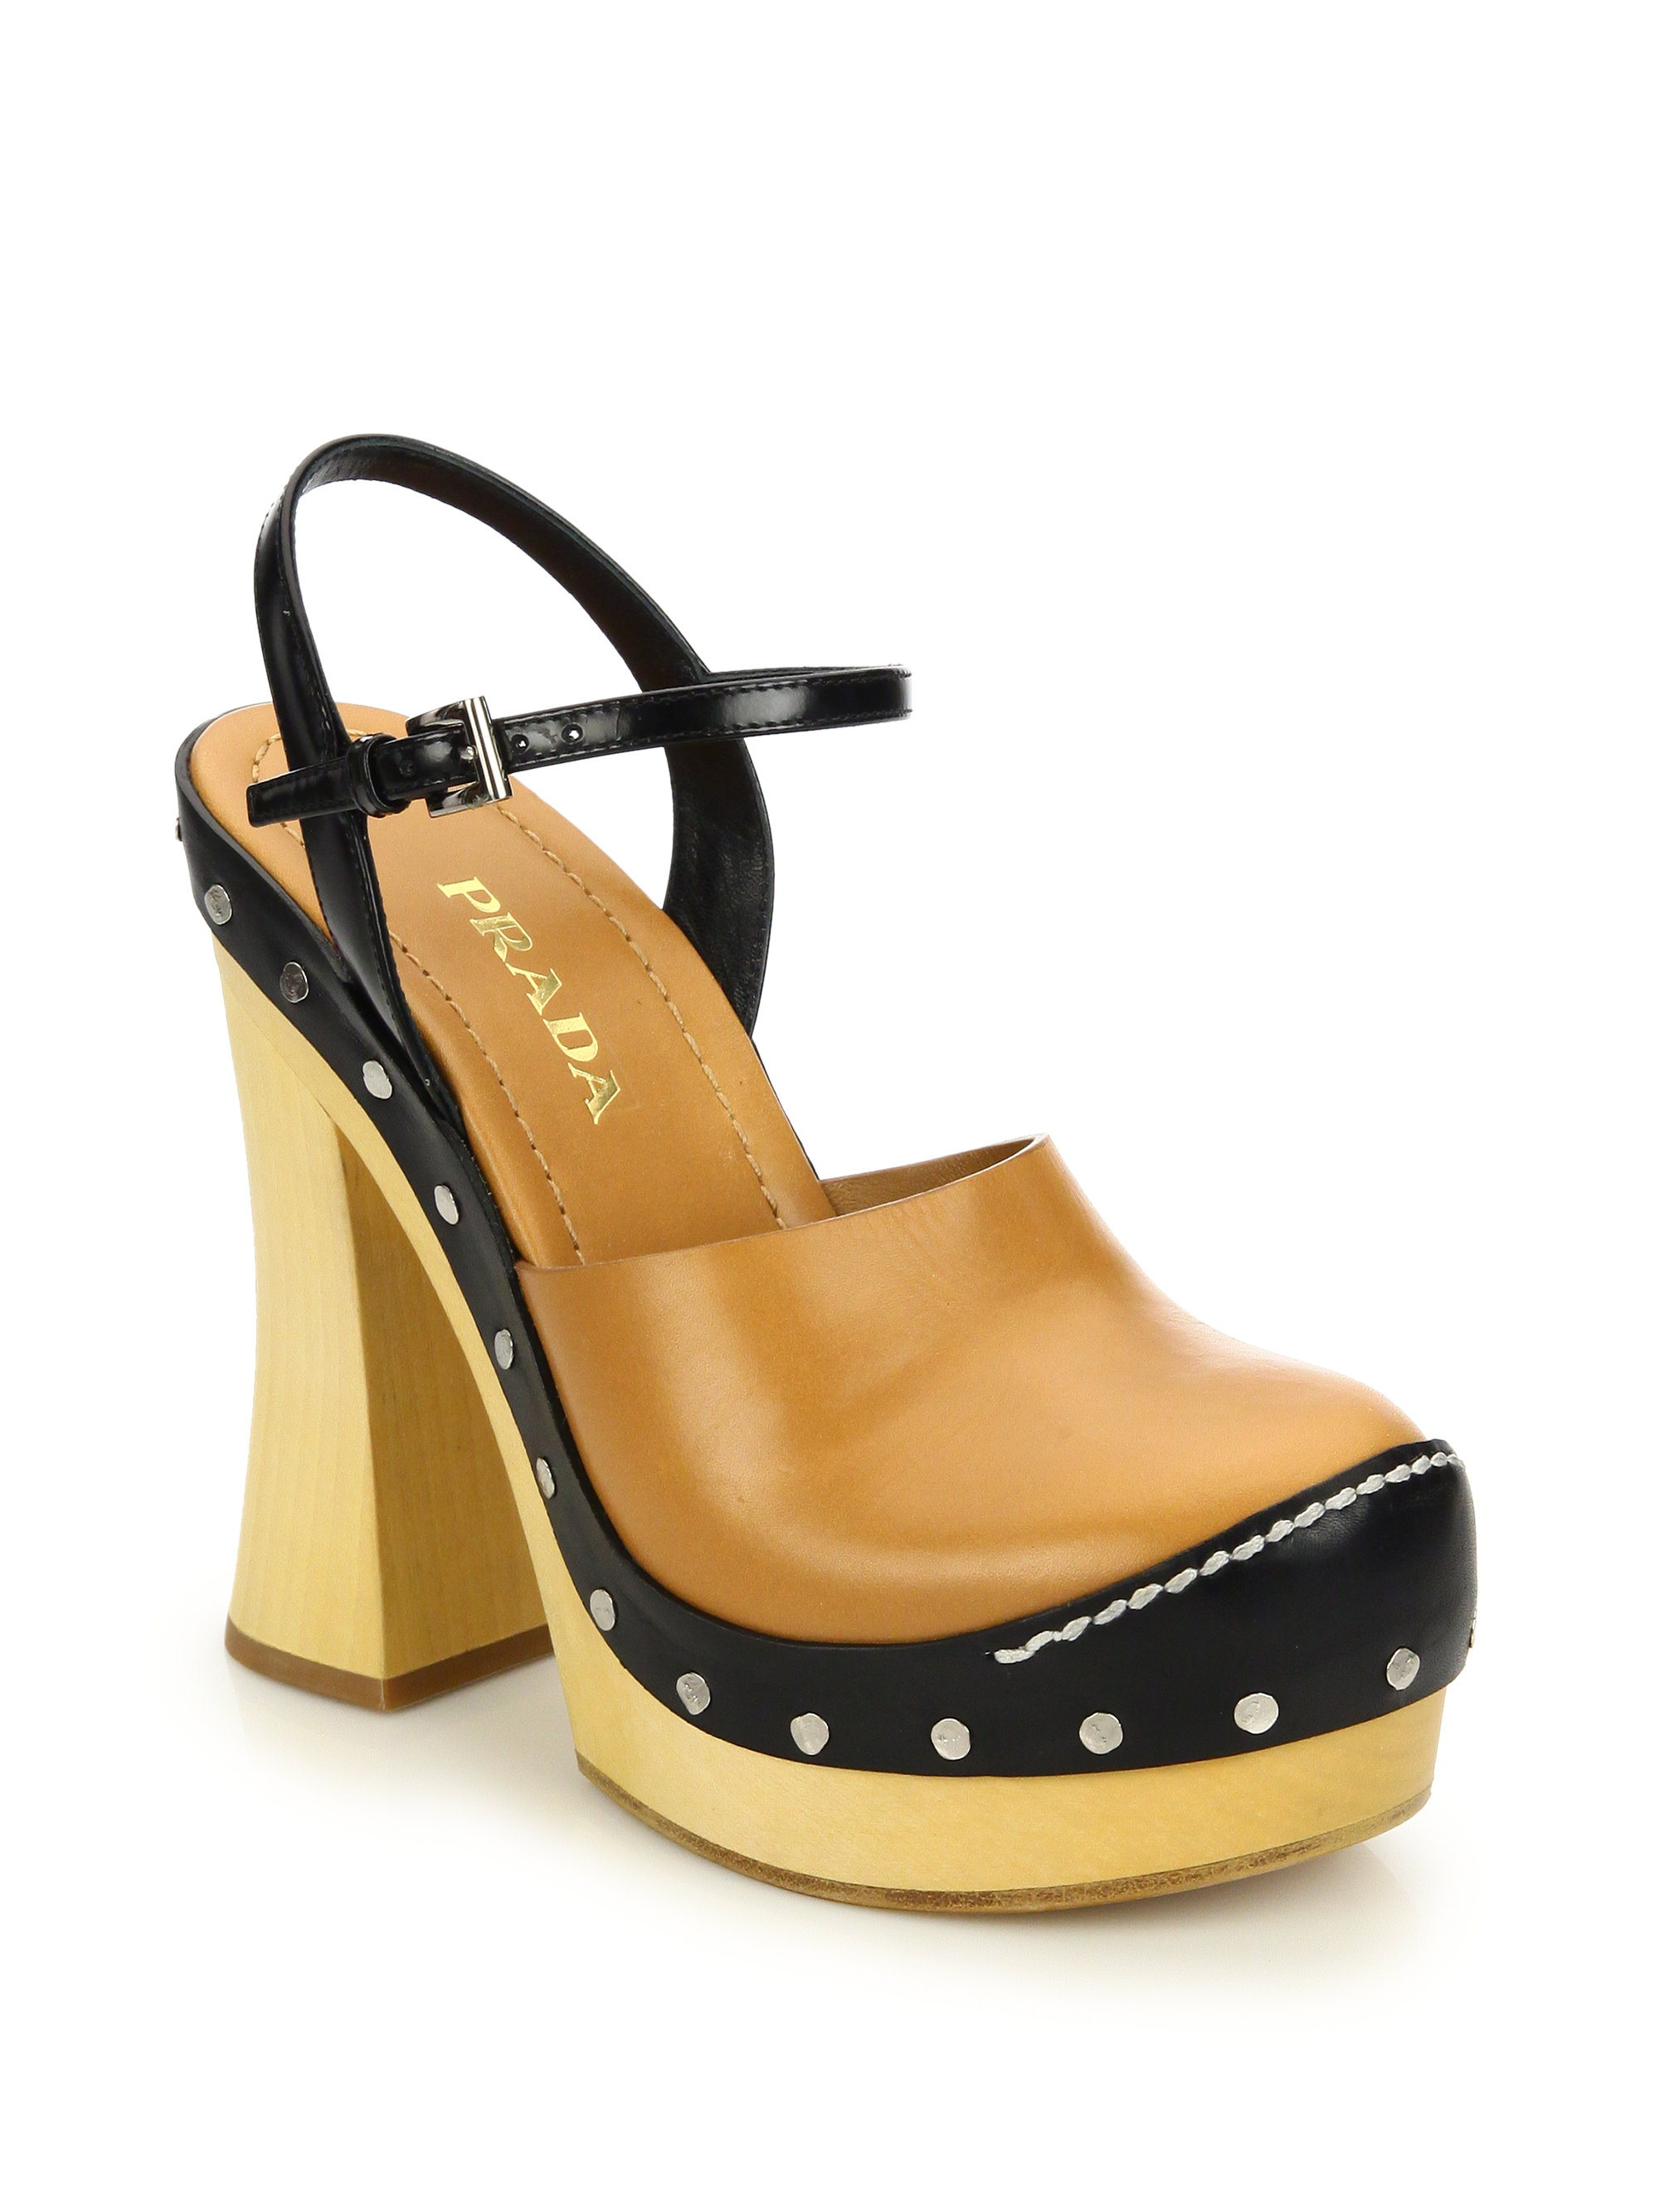 Prada Wooden-Heeled Leather Platform Sandals in Brown-Black (Brown) | Lyst